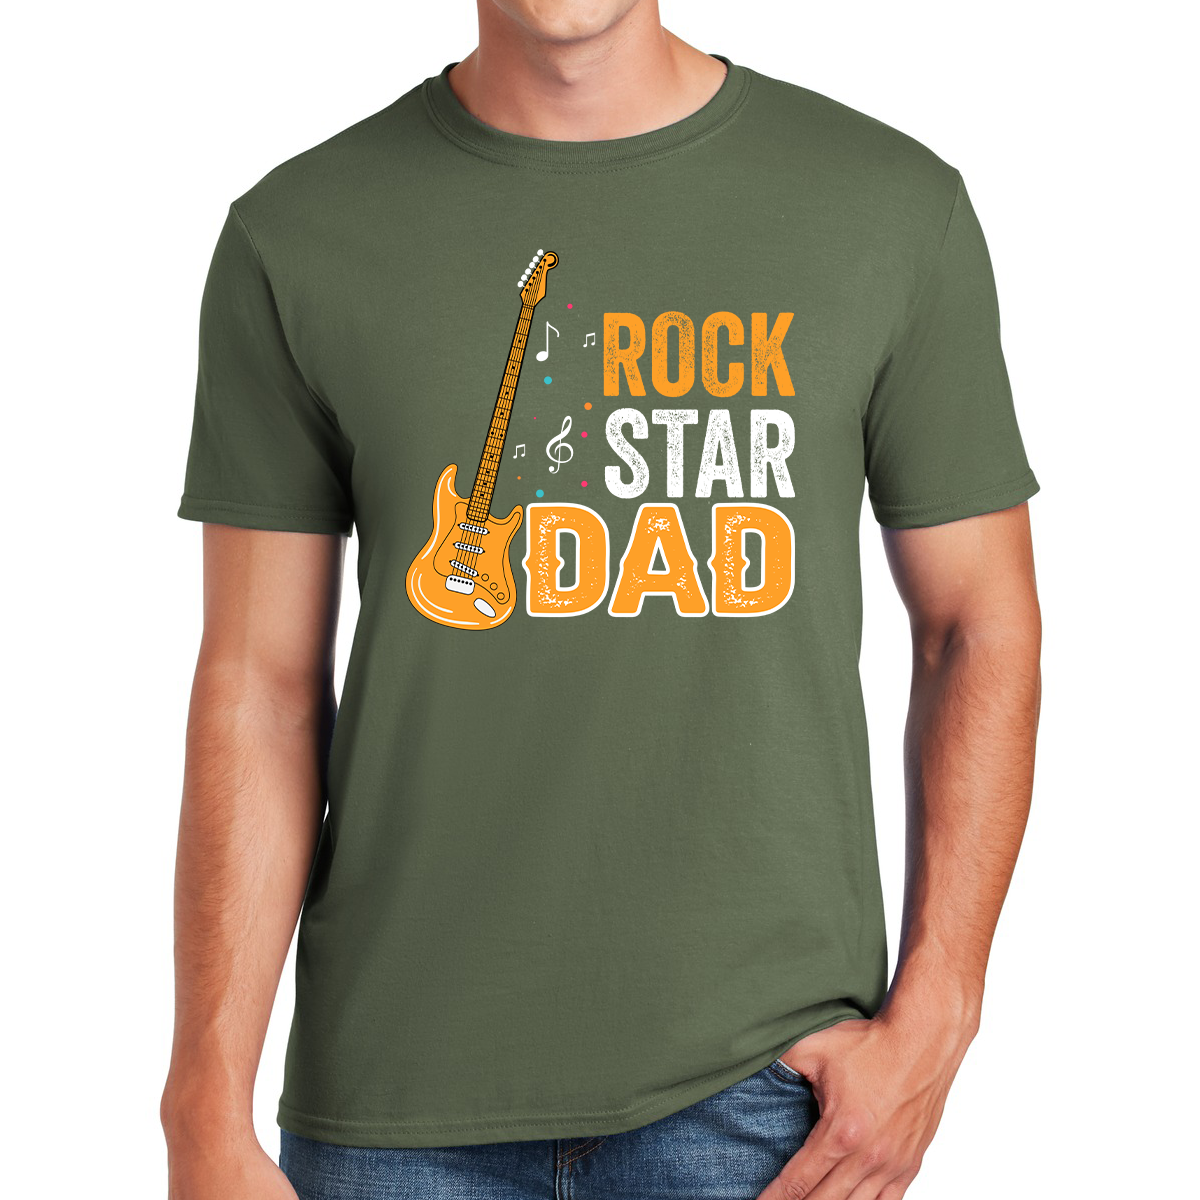 Rock Star Dad Shredding Fatherhood With Style Awesome Dad T-shirt